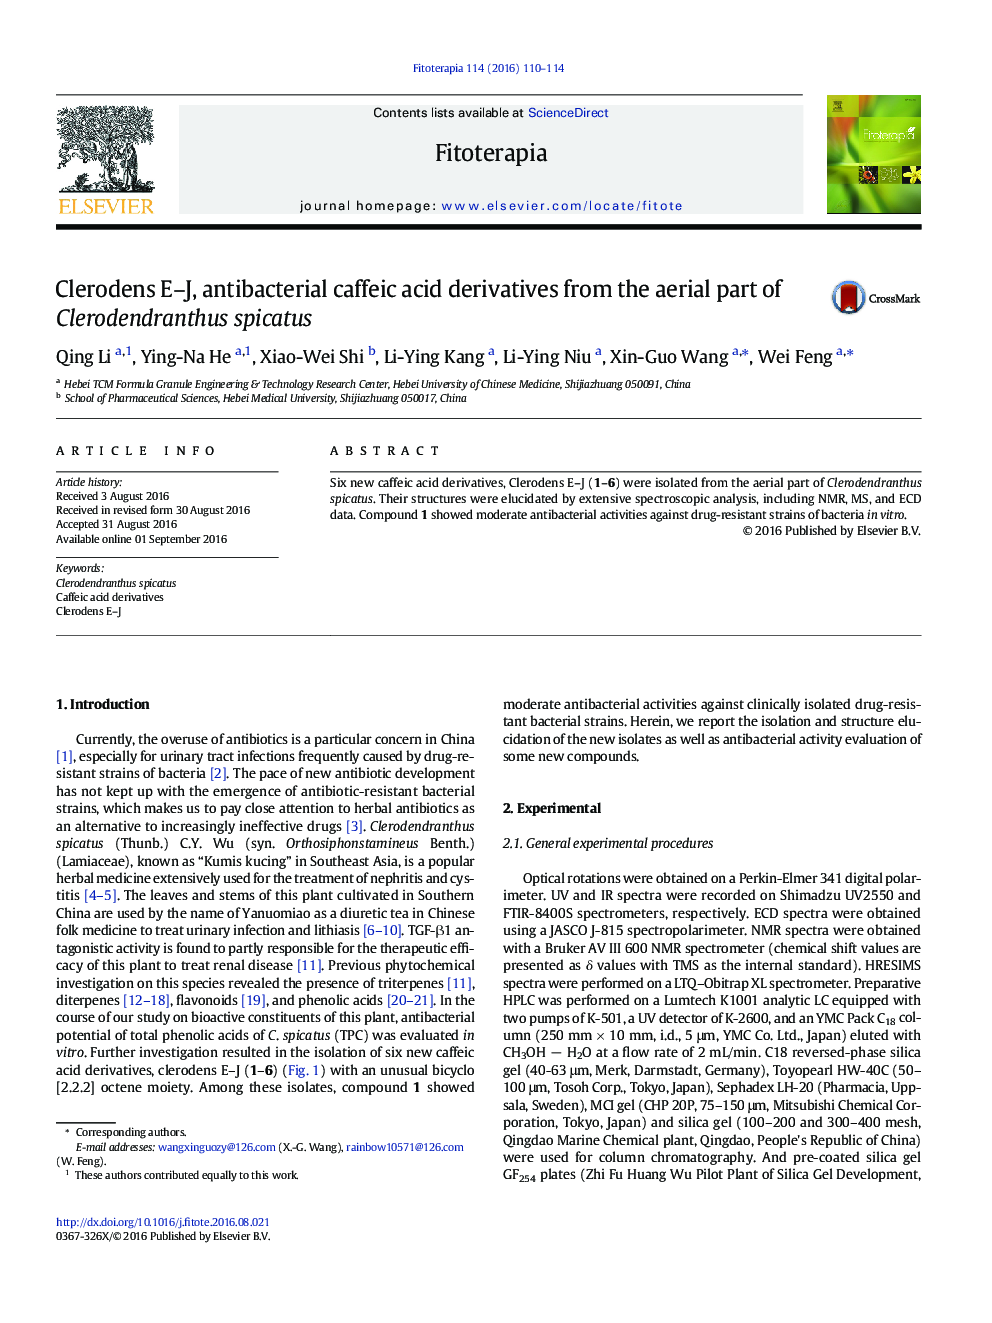 Clerodens E-J، مشتقات اسید کافئیک ضدباکتری از قسمت هوایی Clerodendranthus spicatus